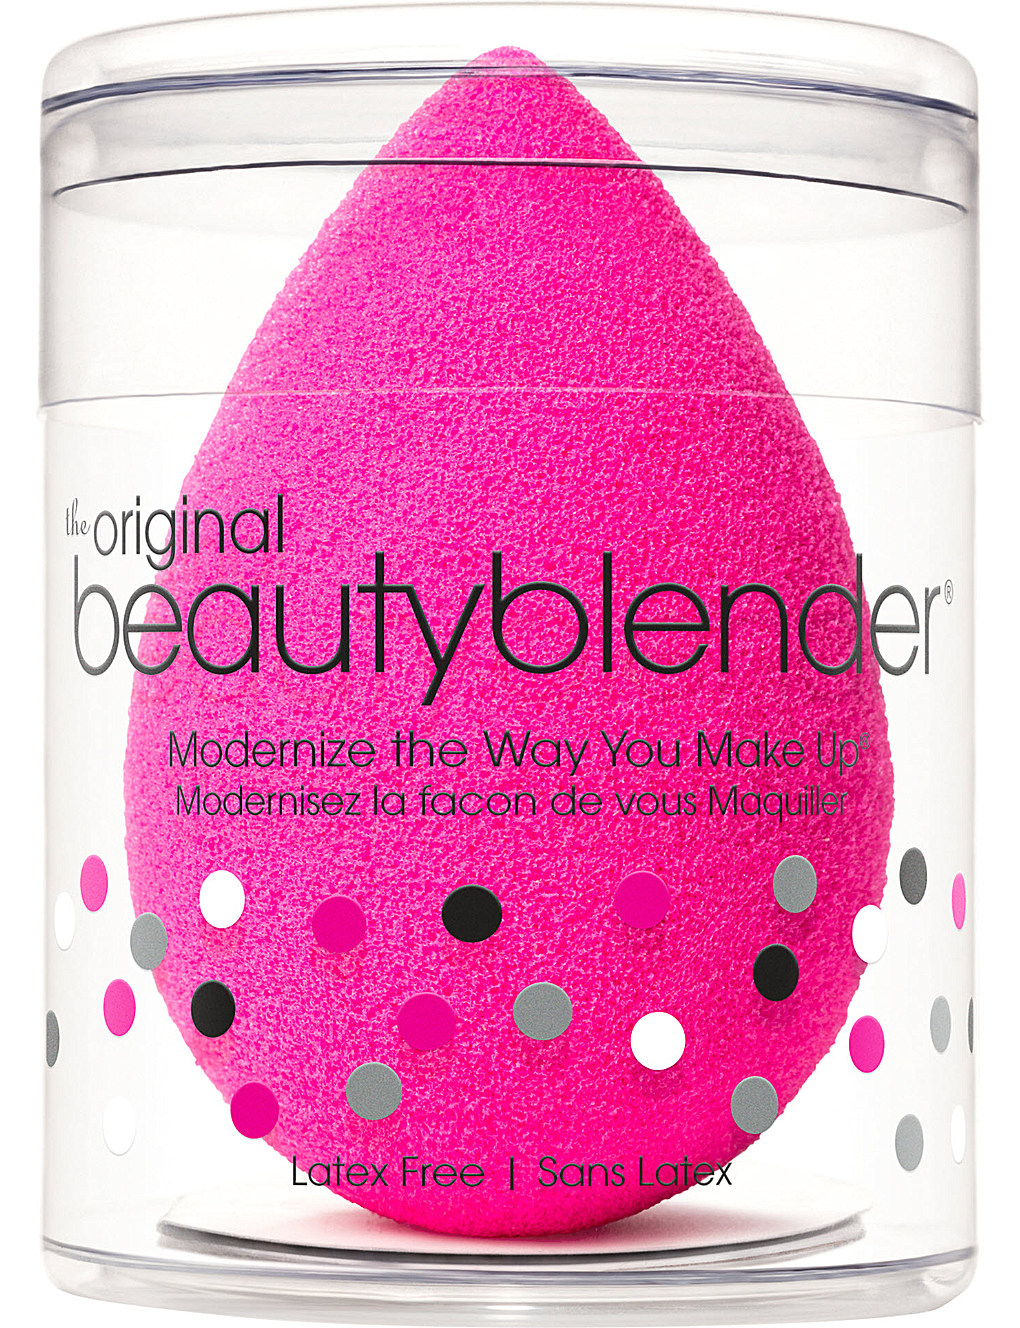 beauty-blender-makeup-classes-nyc.jpg